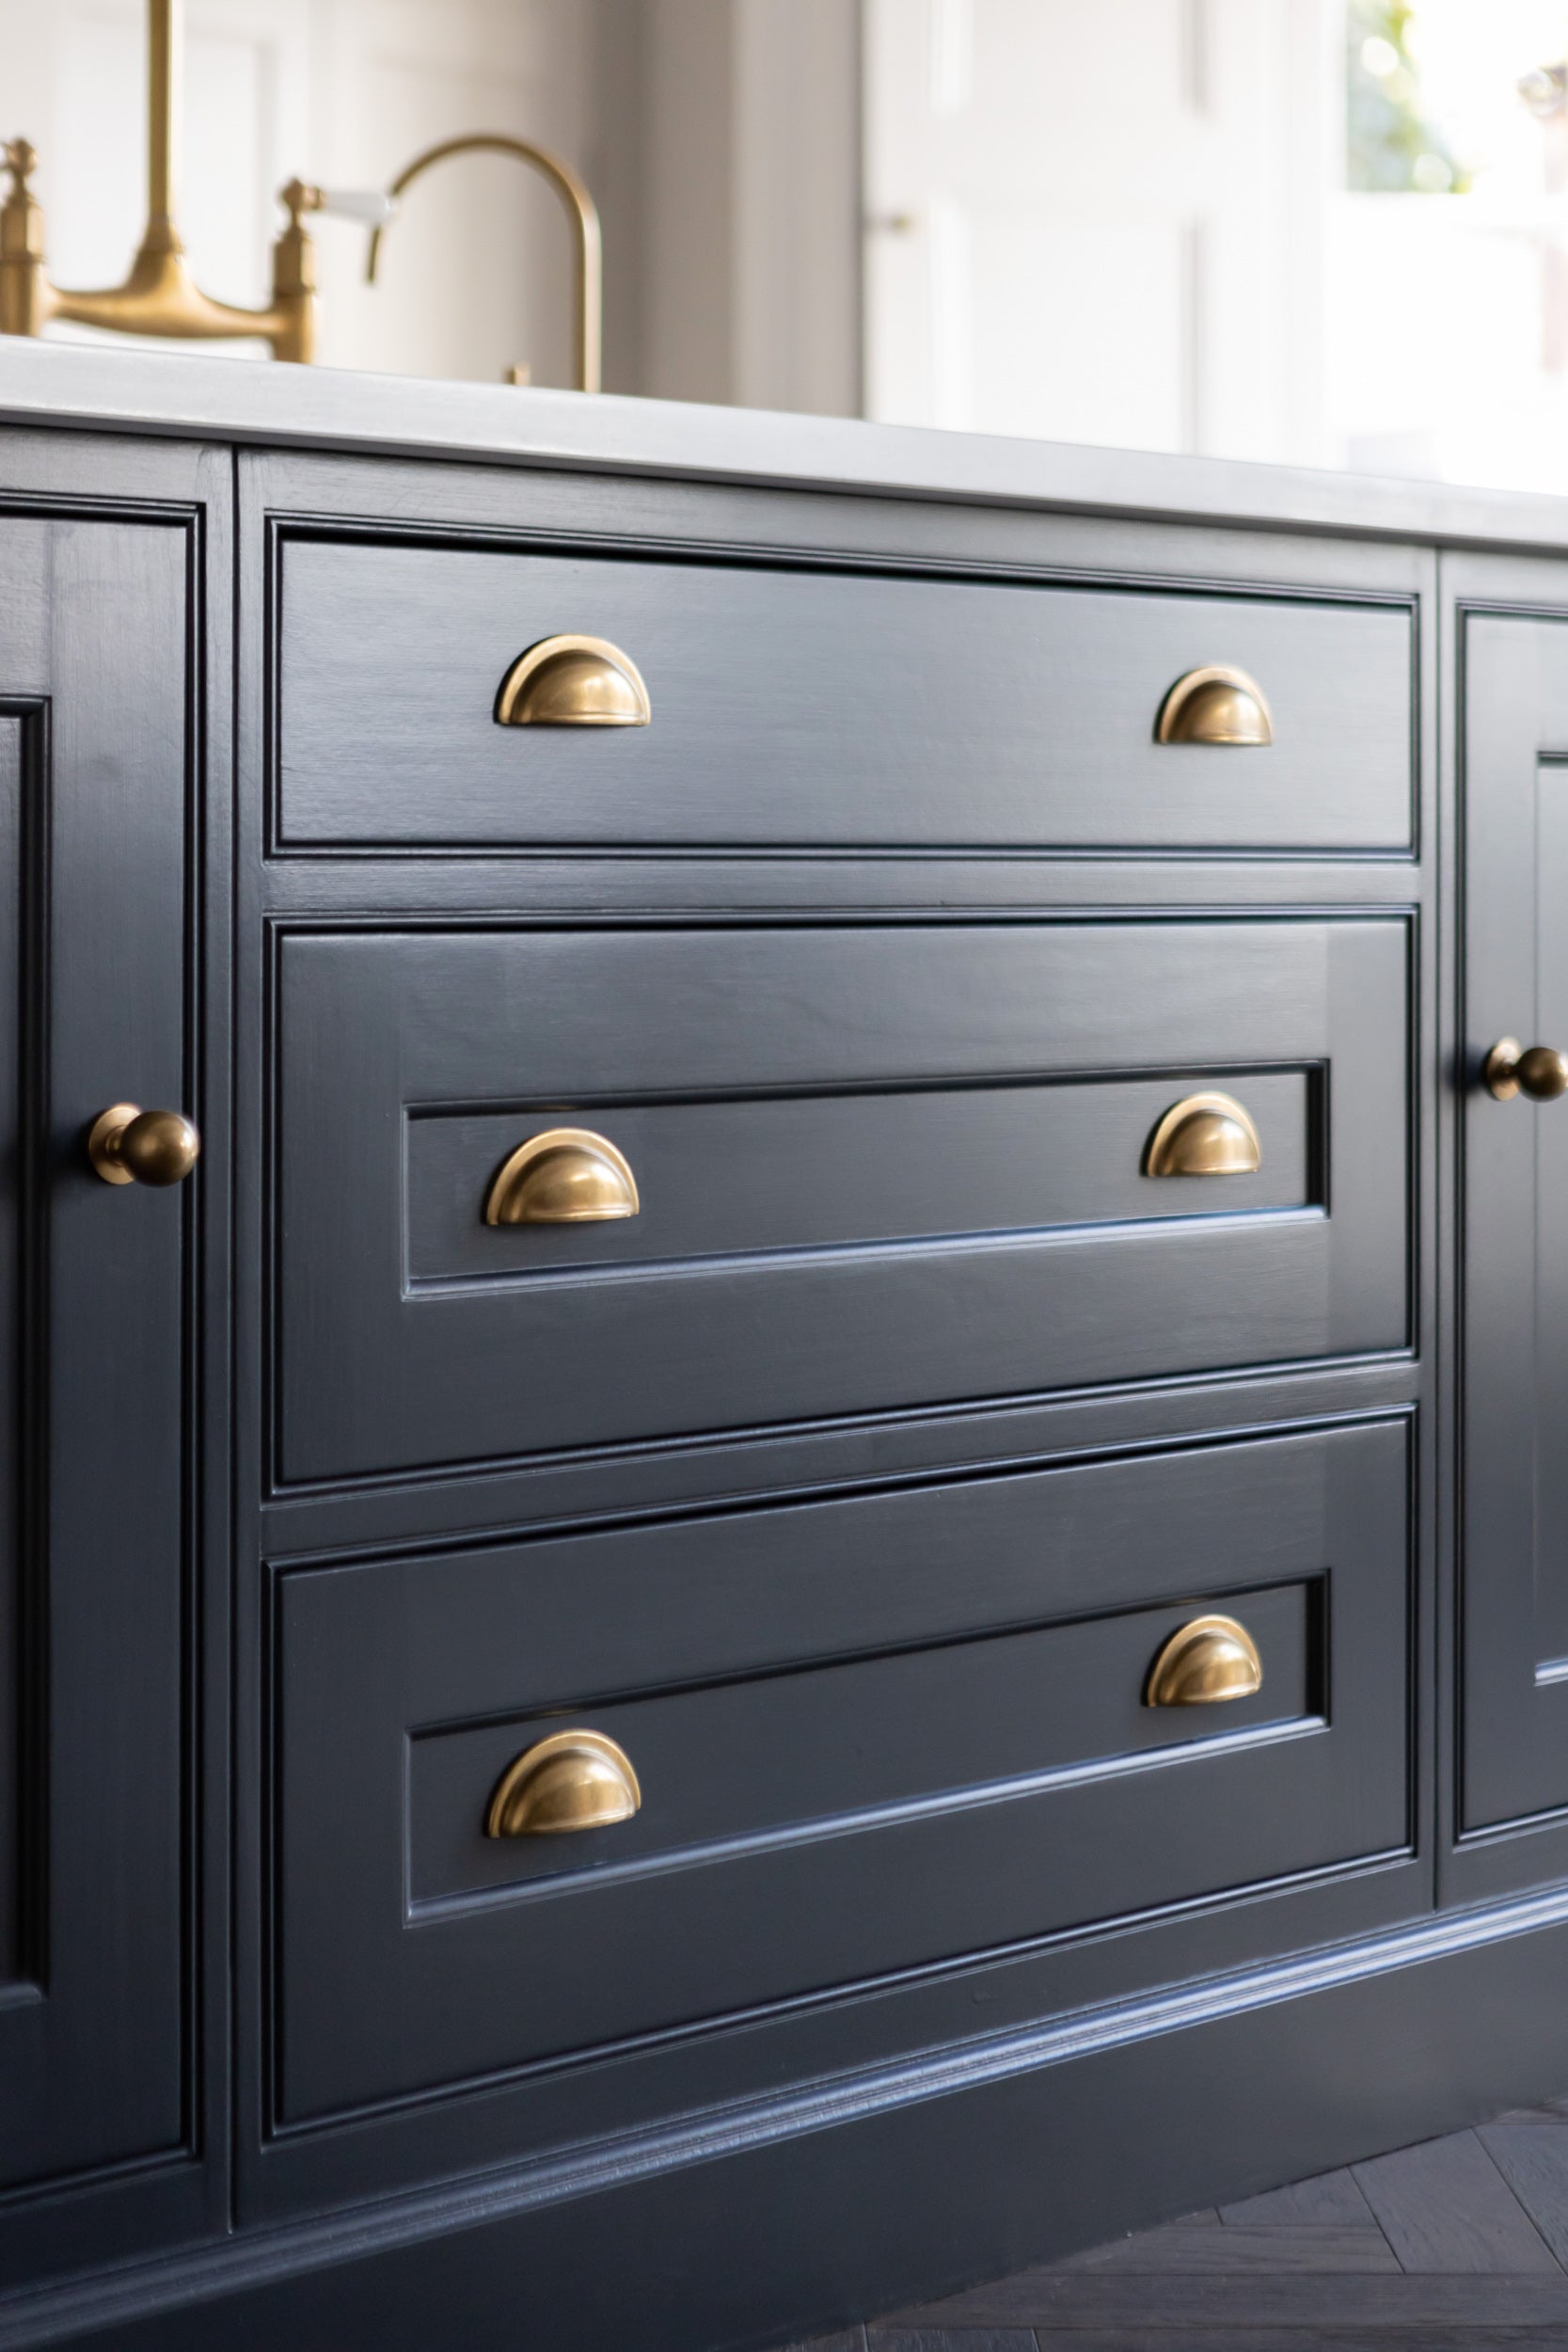 Brass Cabinet Hardware, Traditional Interior Design, Cabinet Handles